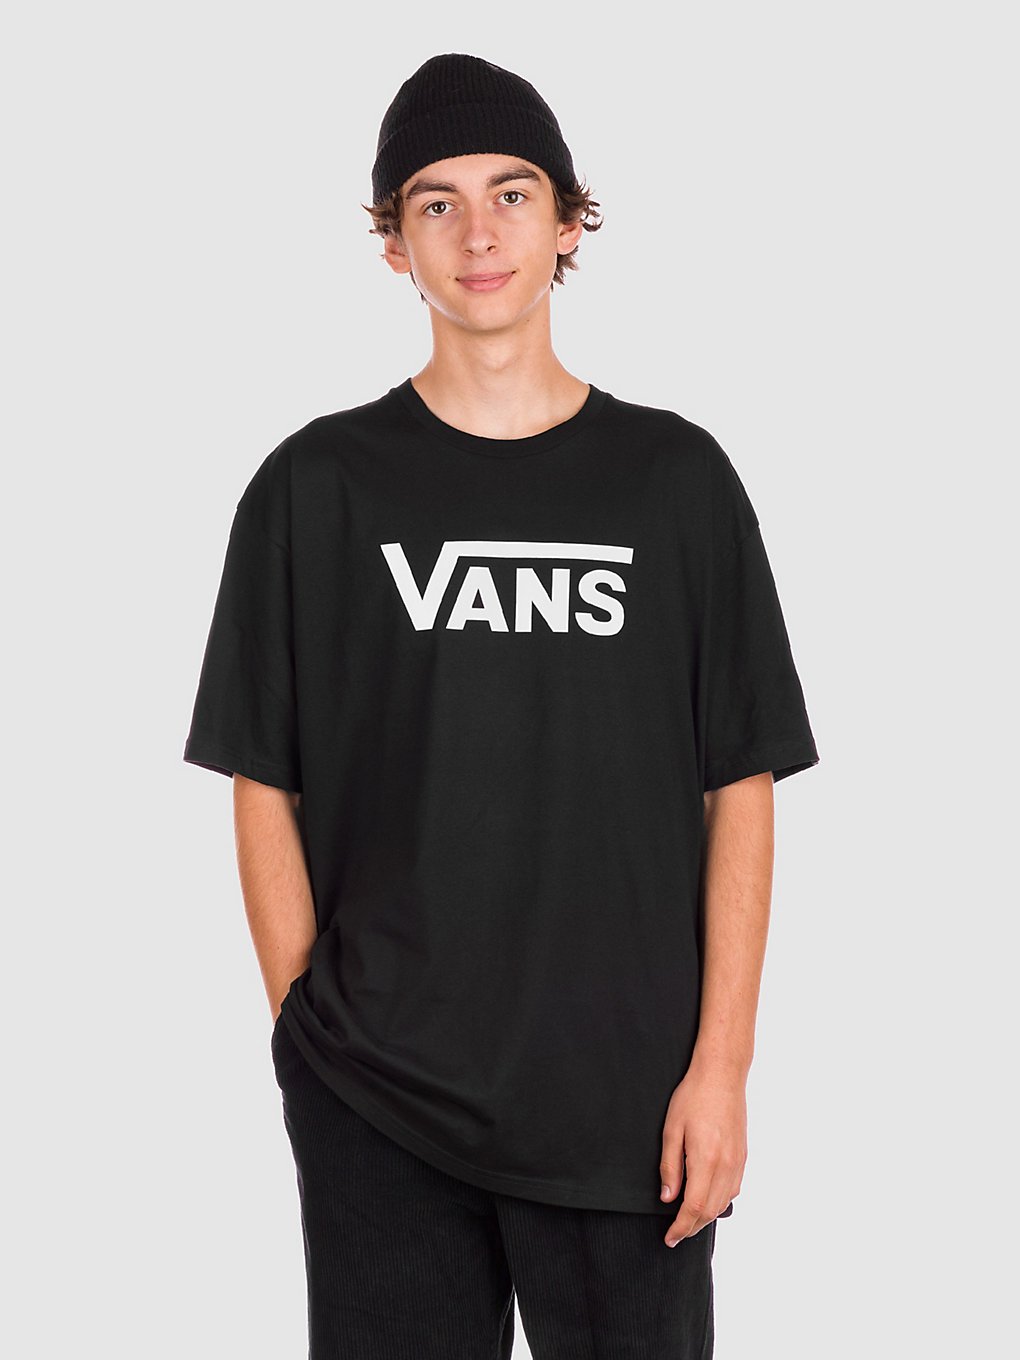 Vans Classic T-Shirt black white kaufen